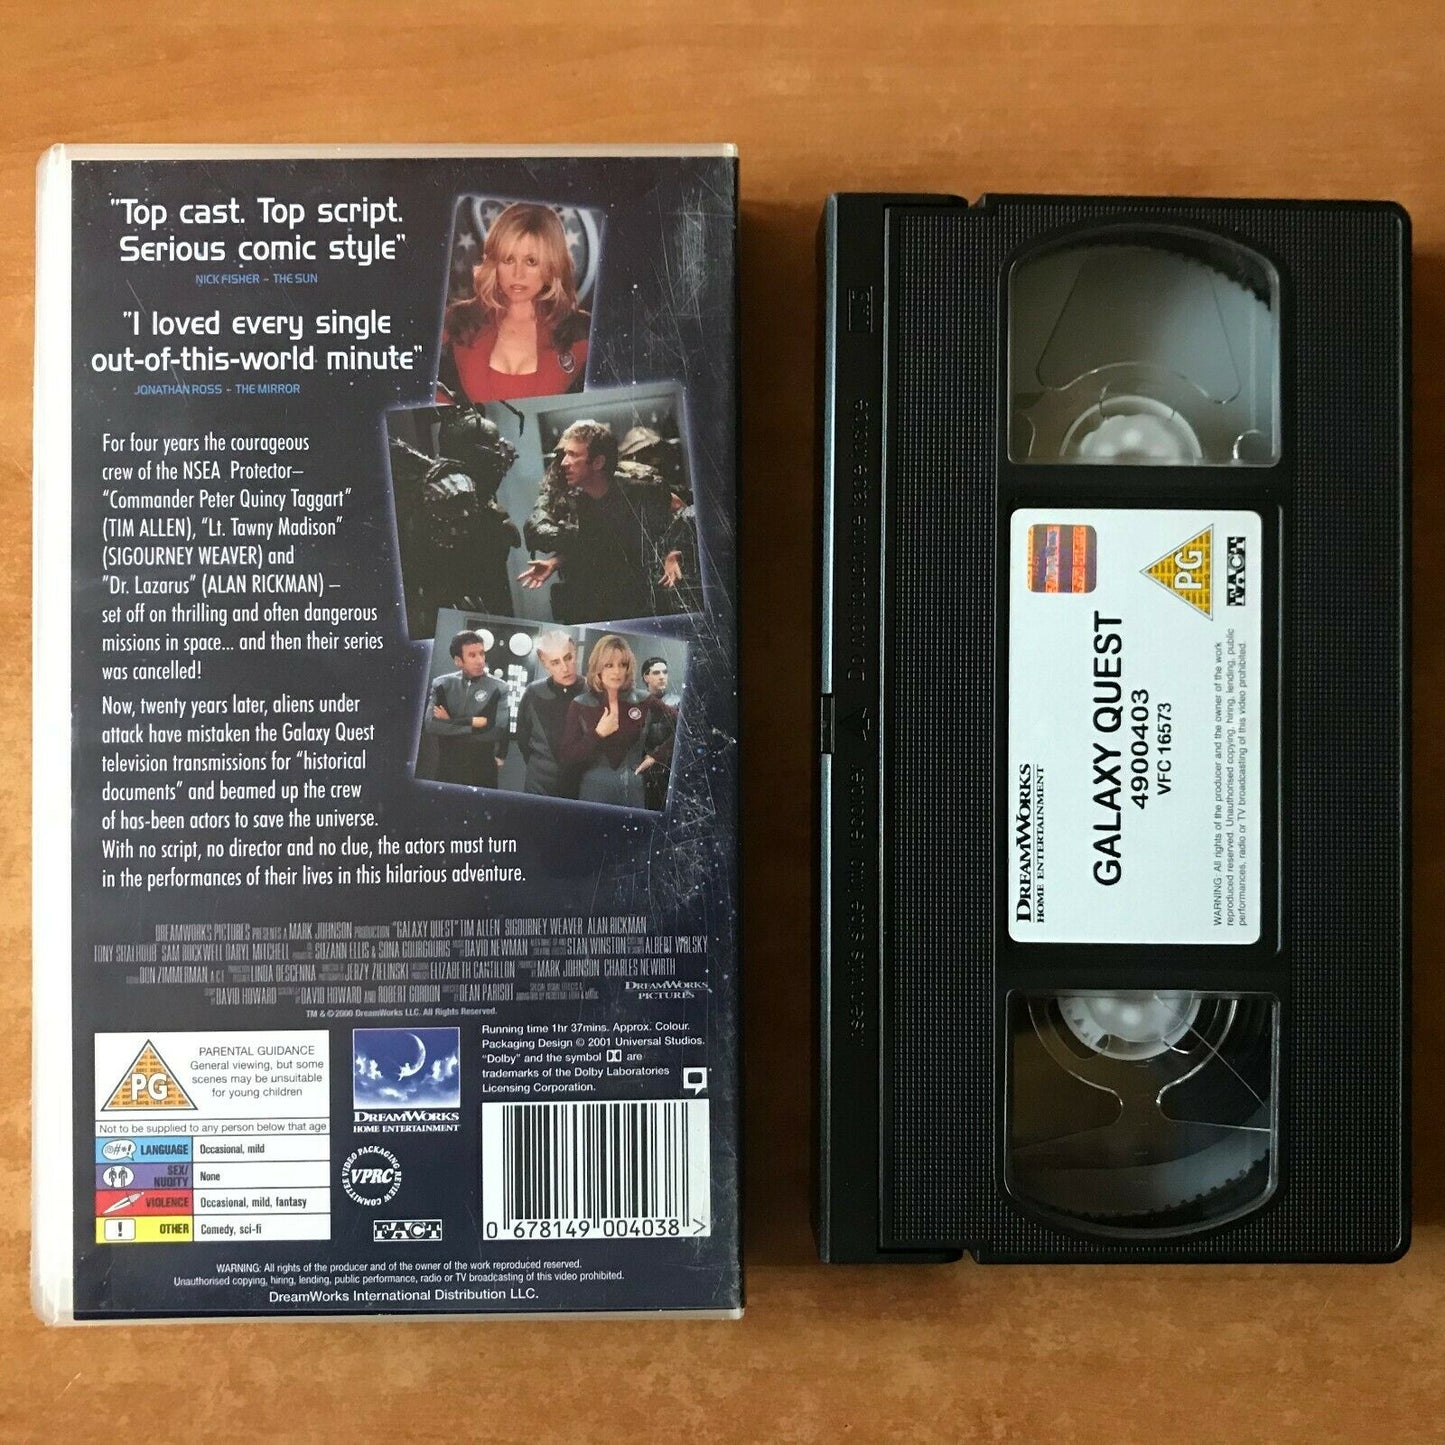 Galaxy Quest: Sci-Fi Parody - Comedy - Sigourney Weaver / Alan Rickman - Pal VHS-